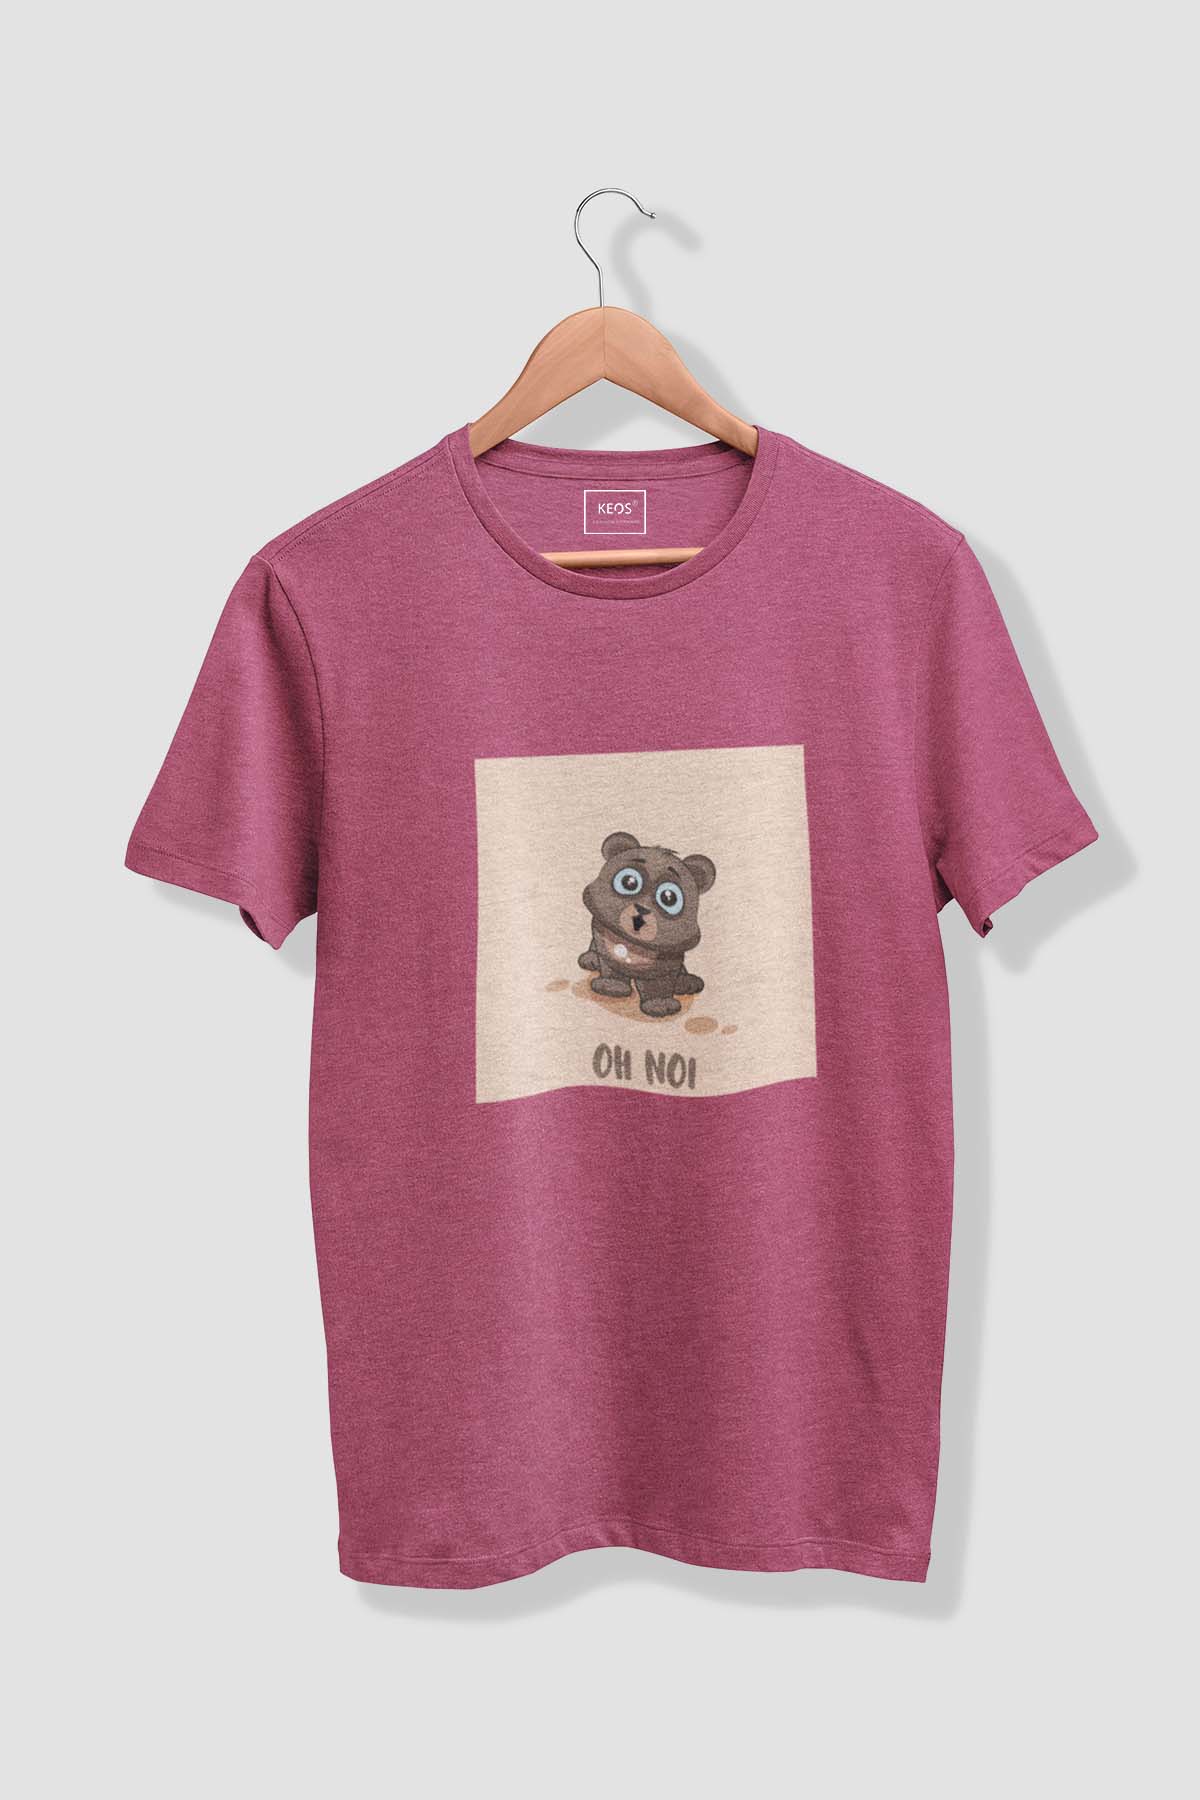 Oh No! - Melange Cotton T-shirt - keos.life